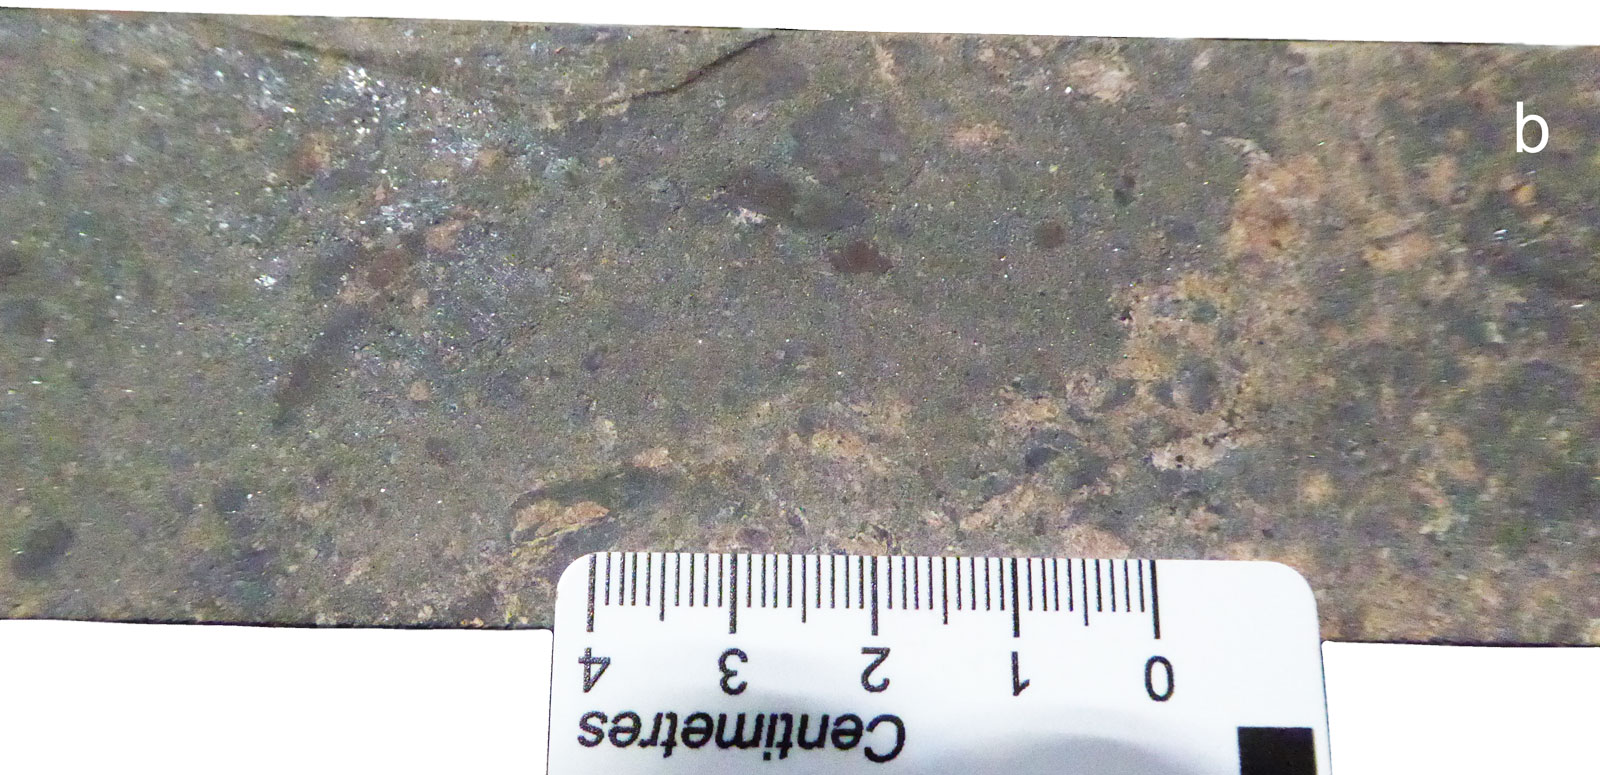 Prominent Hill heteroliithic breccia, hematite altered